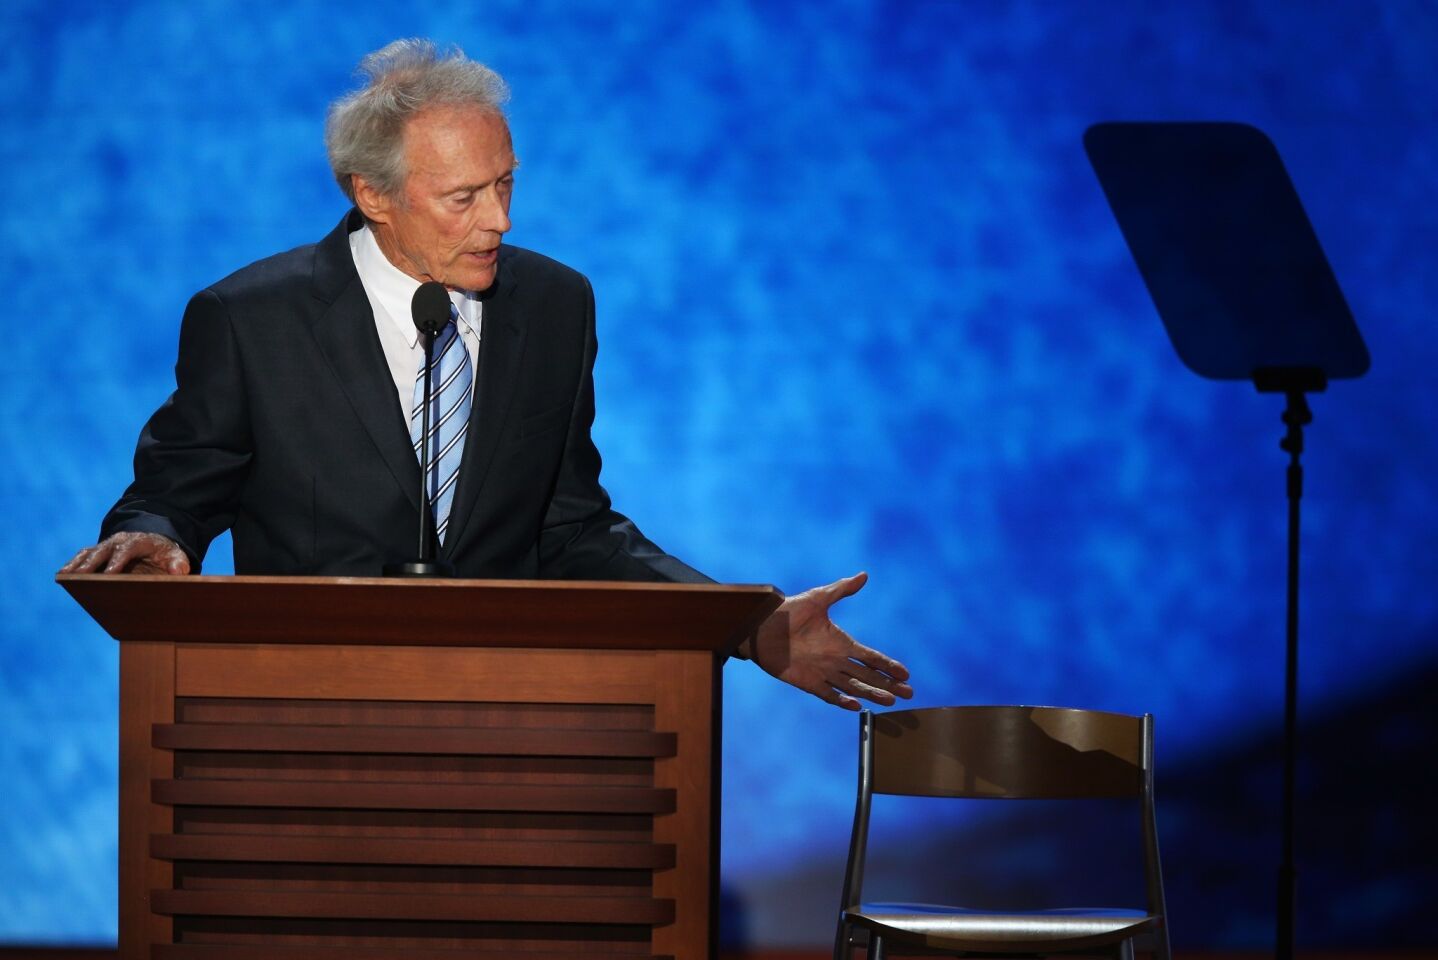 Clint Eastwood's "Empty Chair" speech